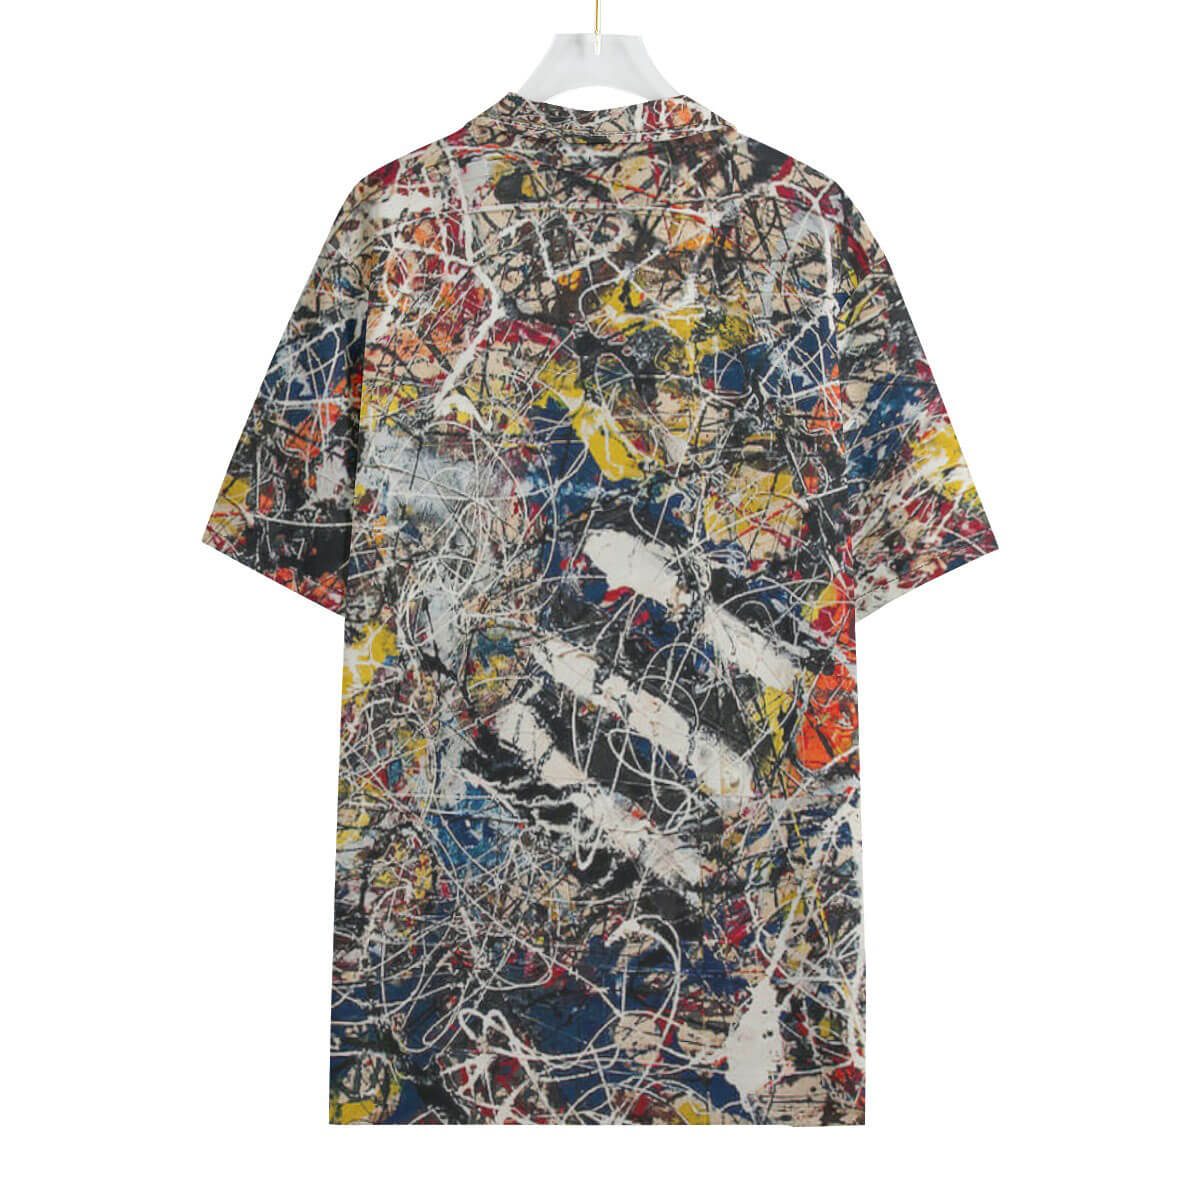 Colorful Jackson Pollock inspired summer shirt